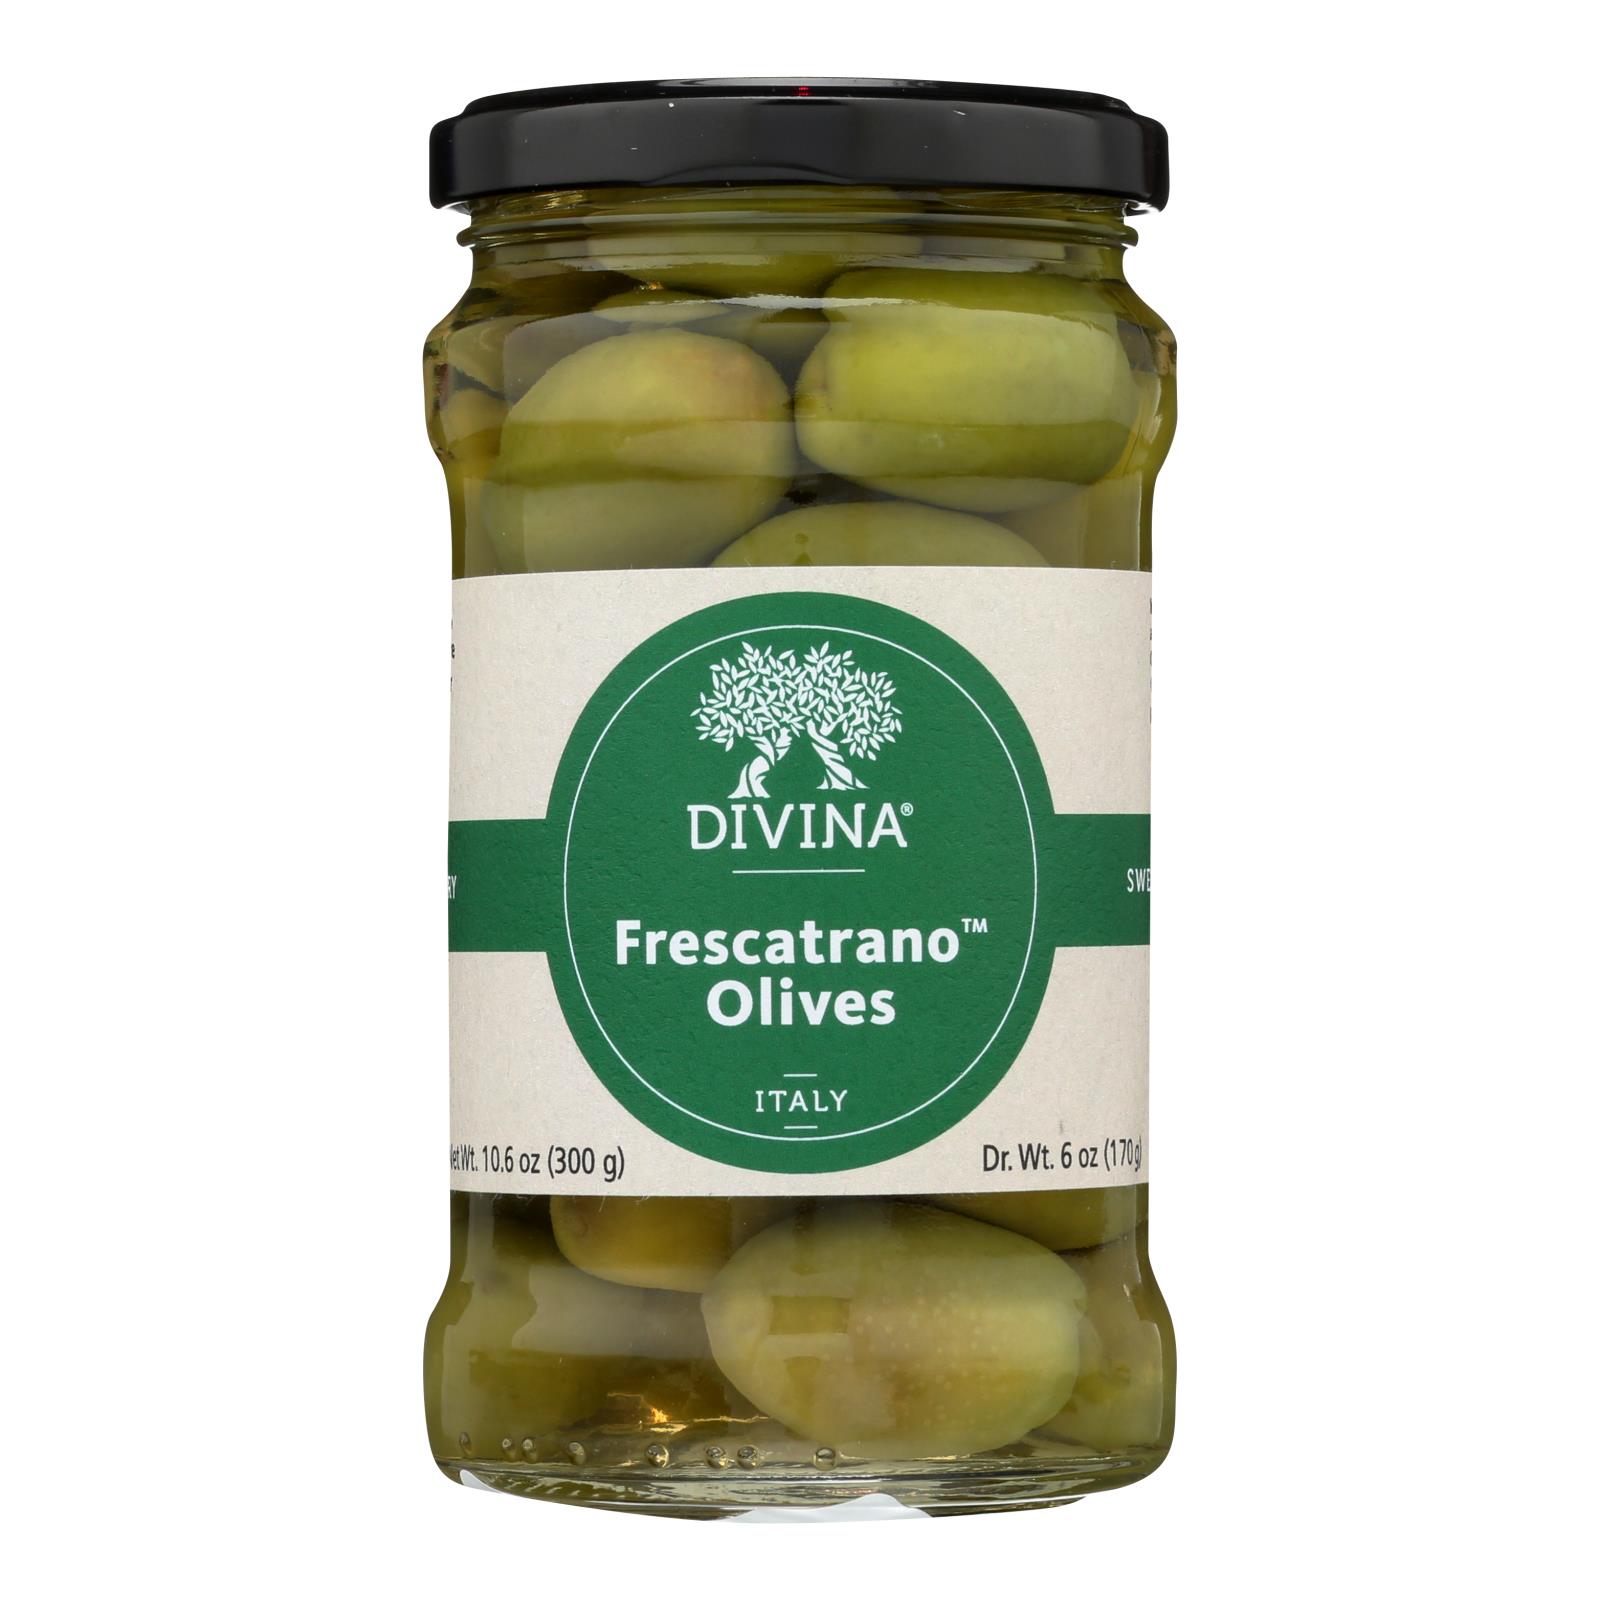 Divina - Olives Frescatrano - 6개 묶음상품 - 6 OZ